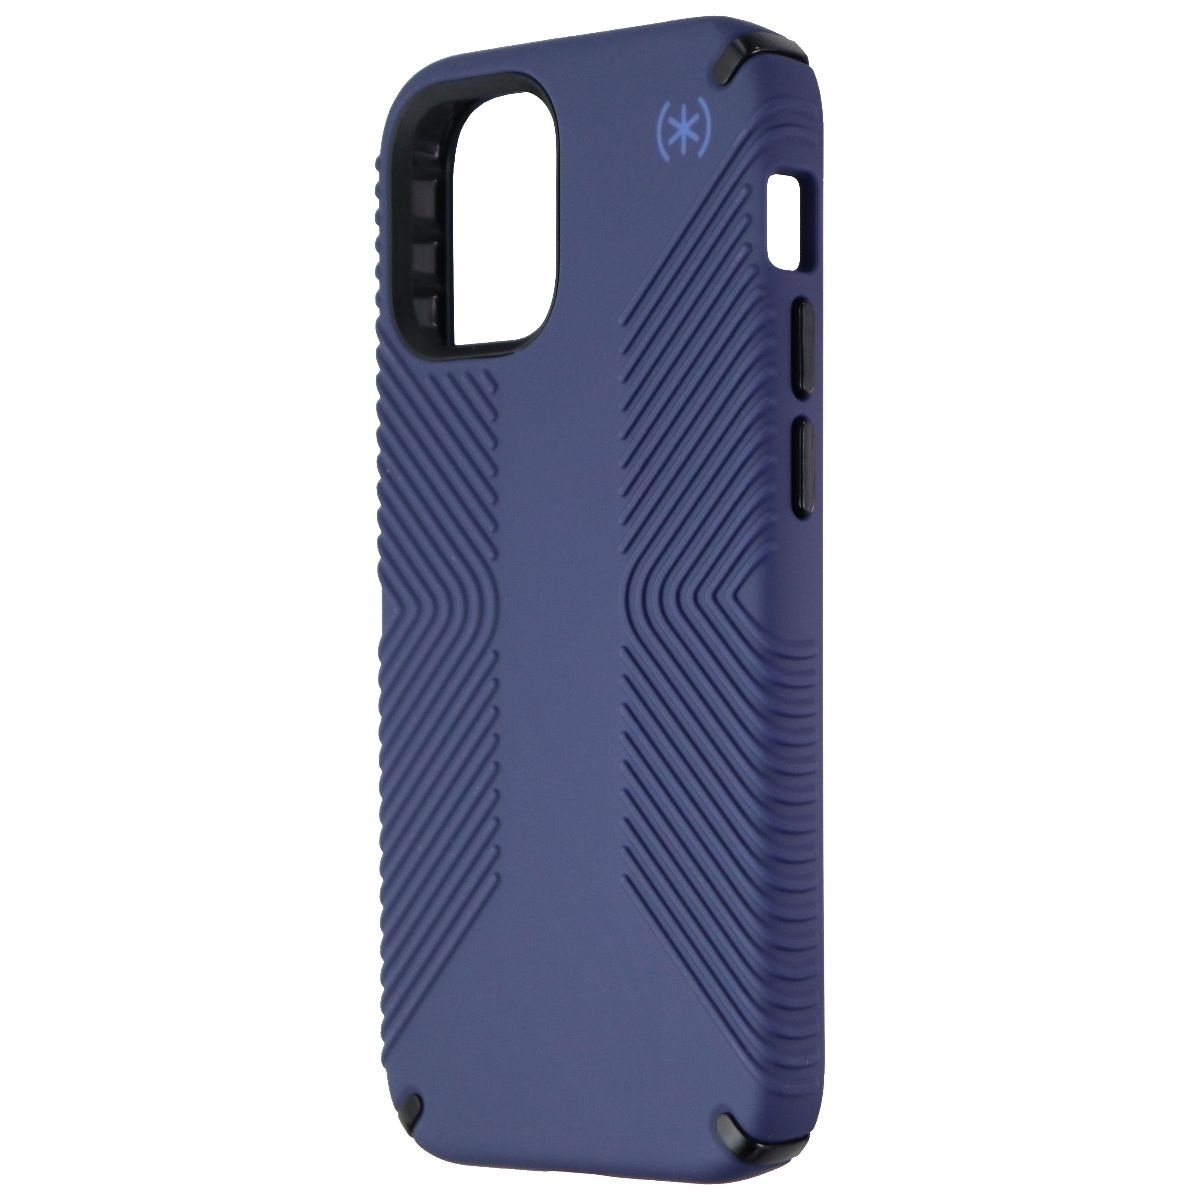 Speck Presidio 2 Grip Series Case For Apple IPhone 12 Mini - Coastal Blue/Black